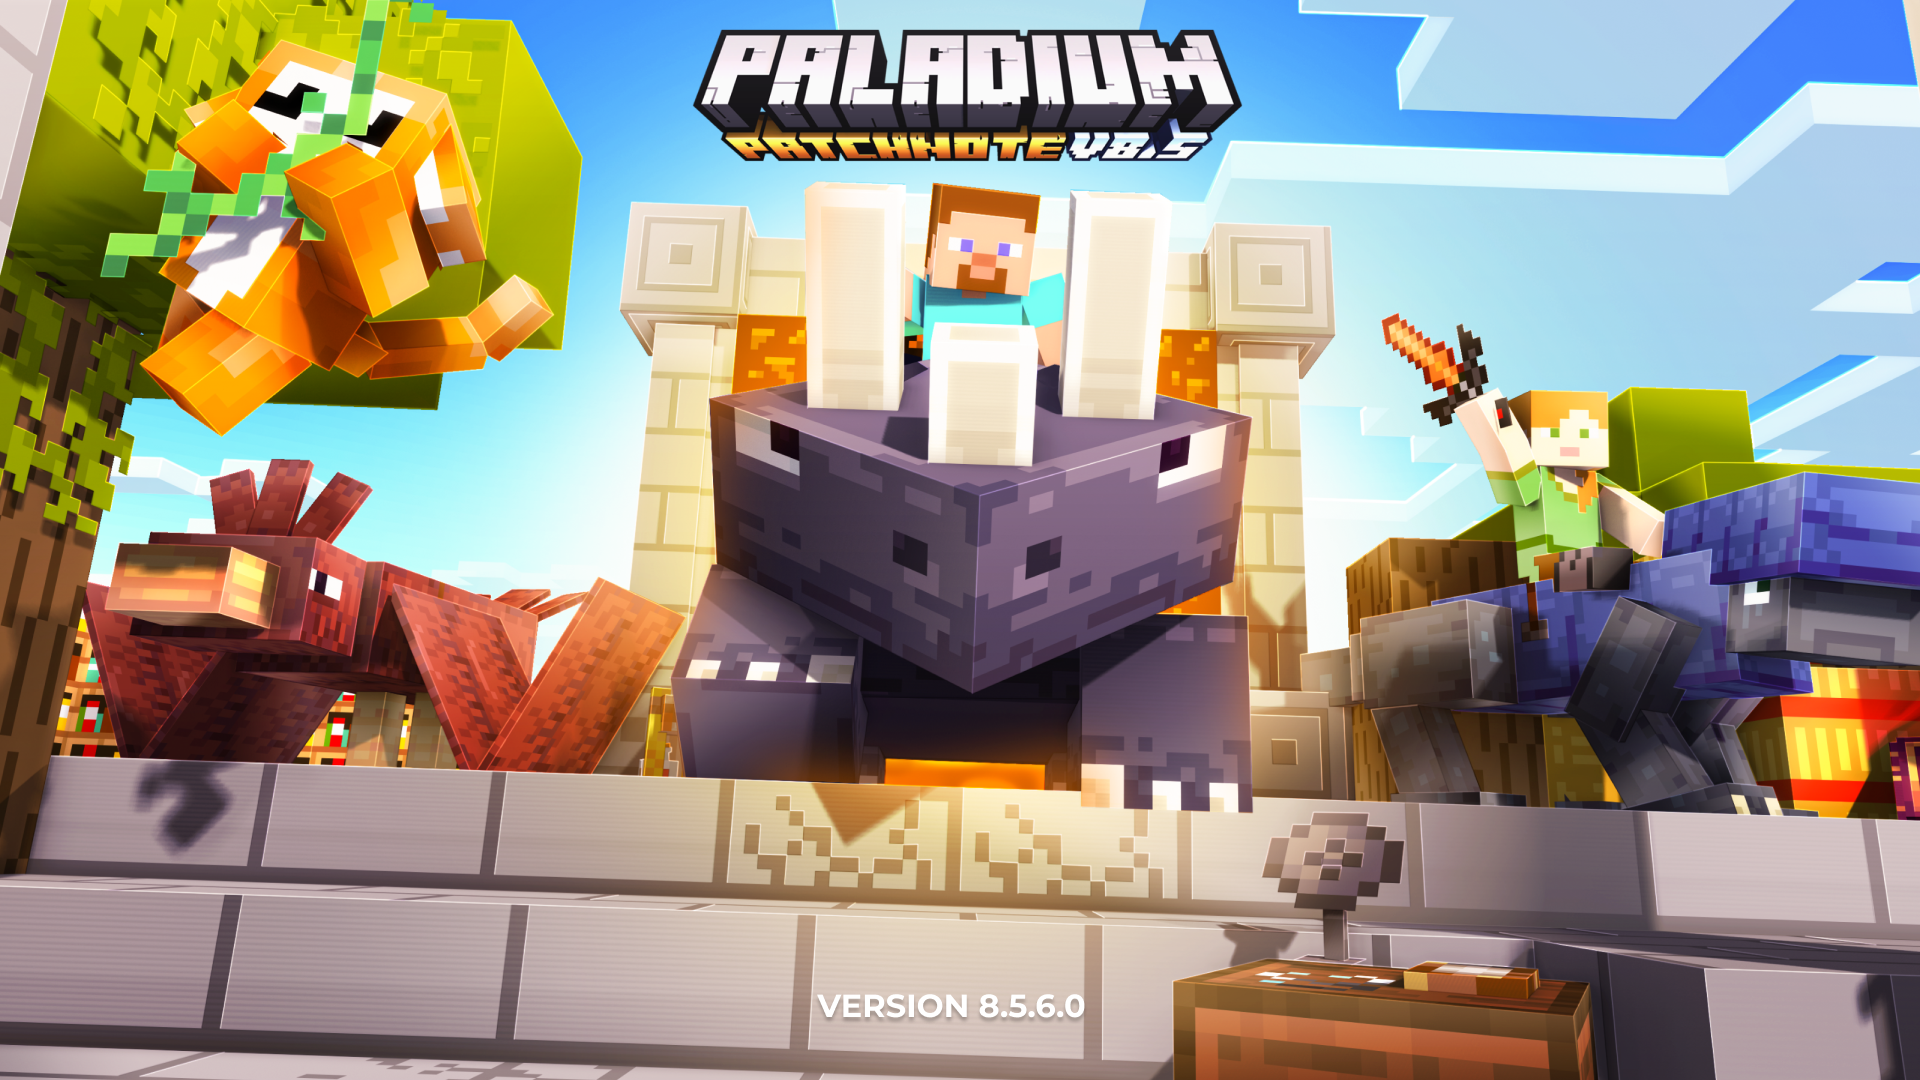 Paladium - PatchNote V8.5.6.0 | 23/02/2023